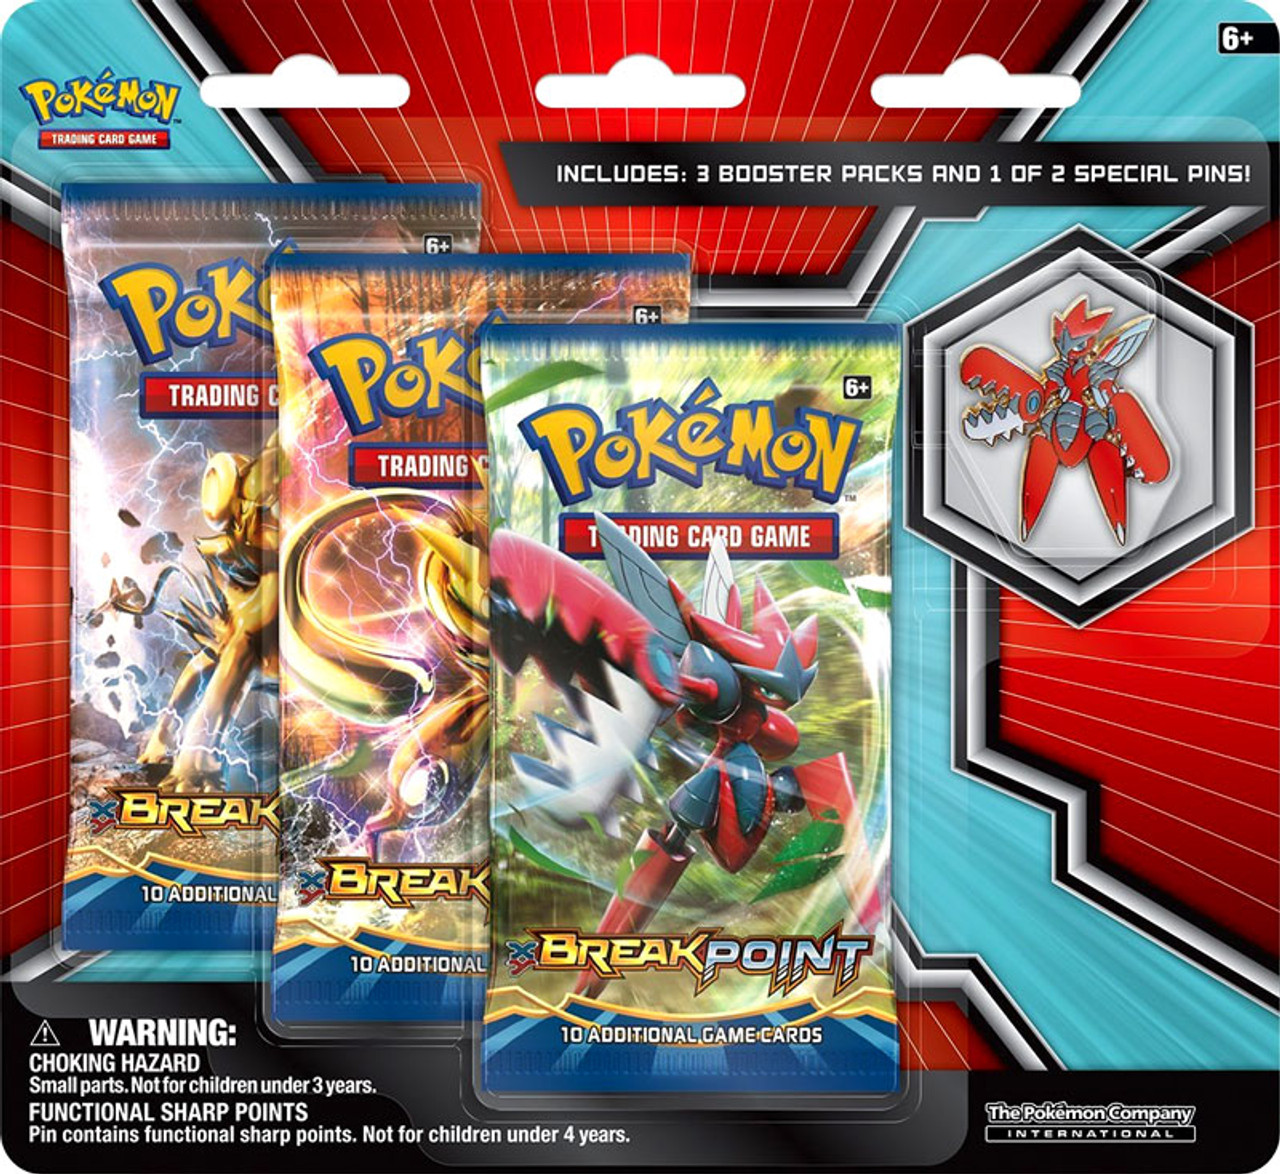 pokemon-mega-scizor-pin-pack-pokemon-usa-pre-order-ships-february-8__74406.1461393838.jpg